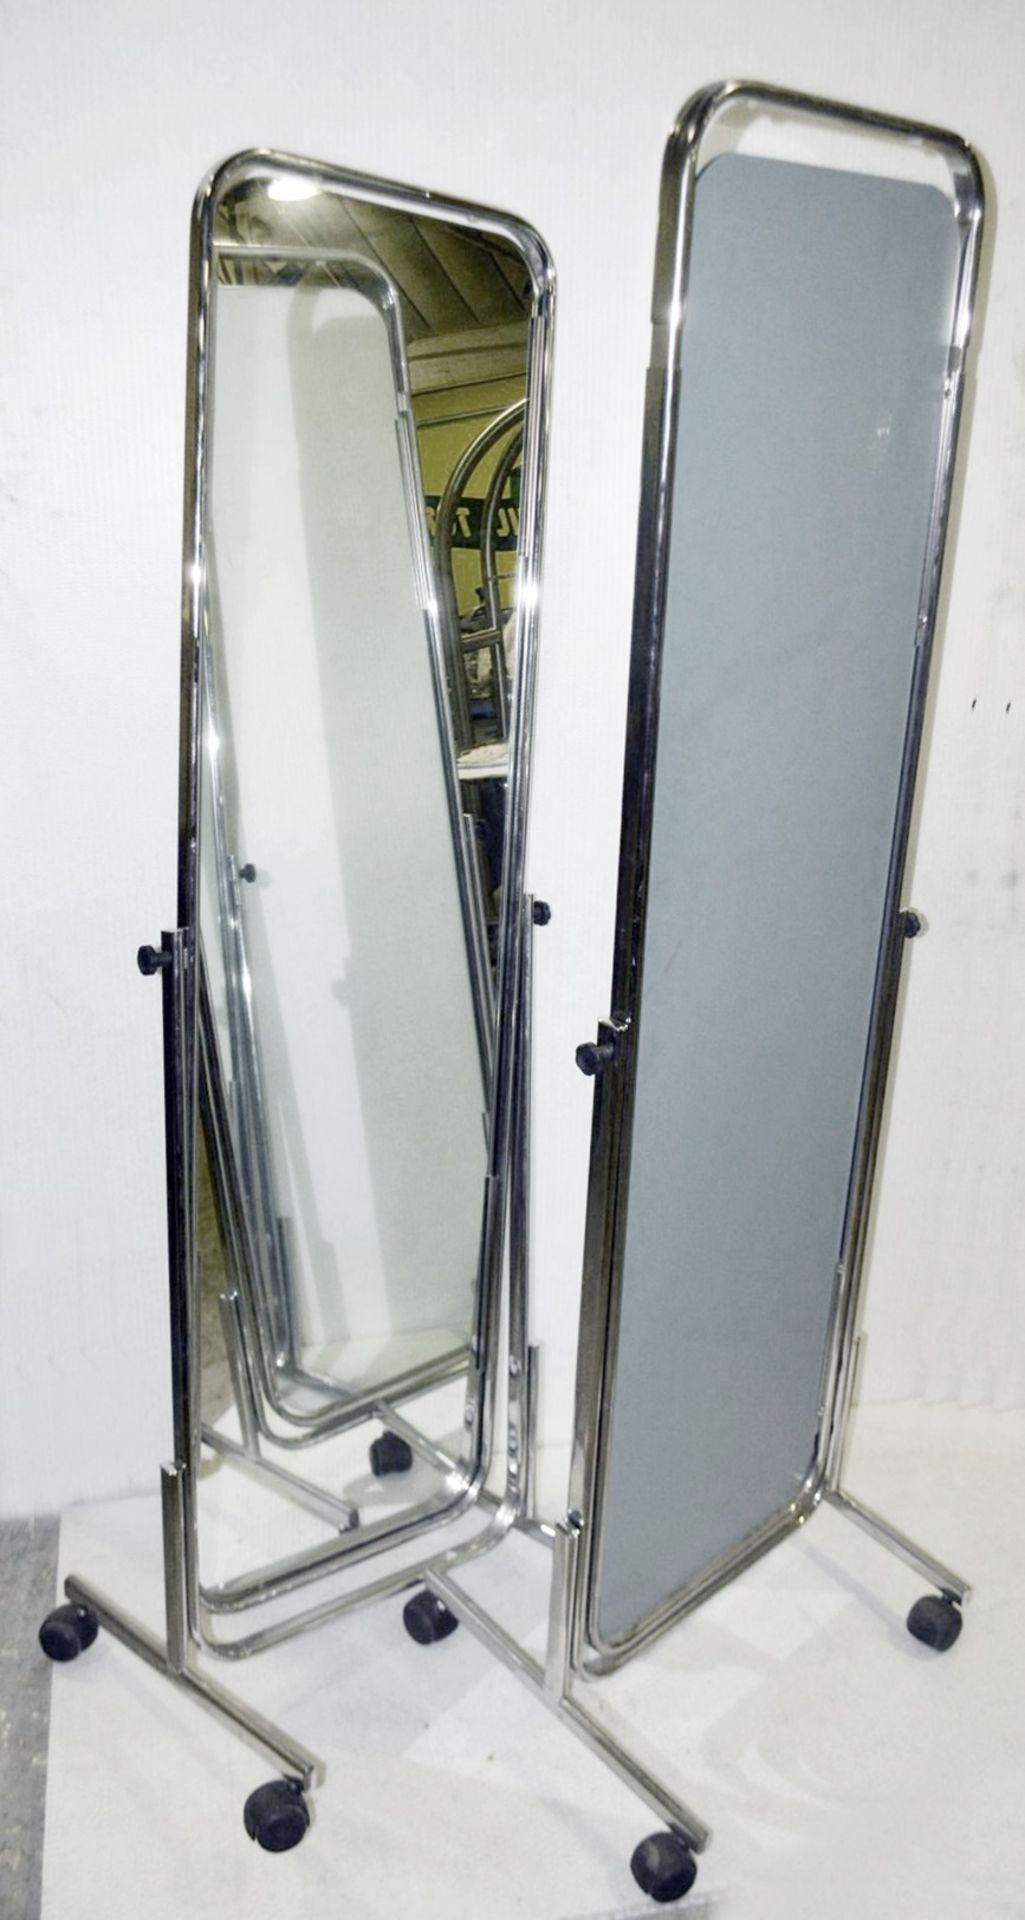 2 x Stylish Full-length Mirrors - Dimensions: H162 x W50 x D47cm - Ref: HAR252+253 GIT - CL987 -